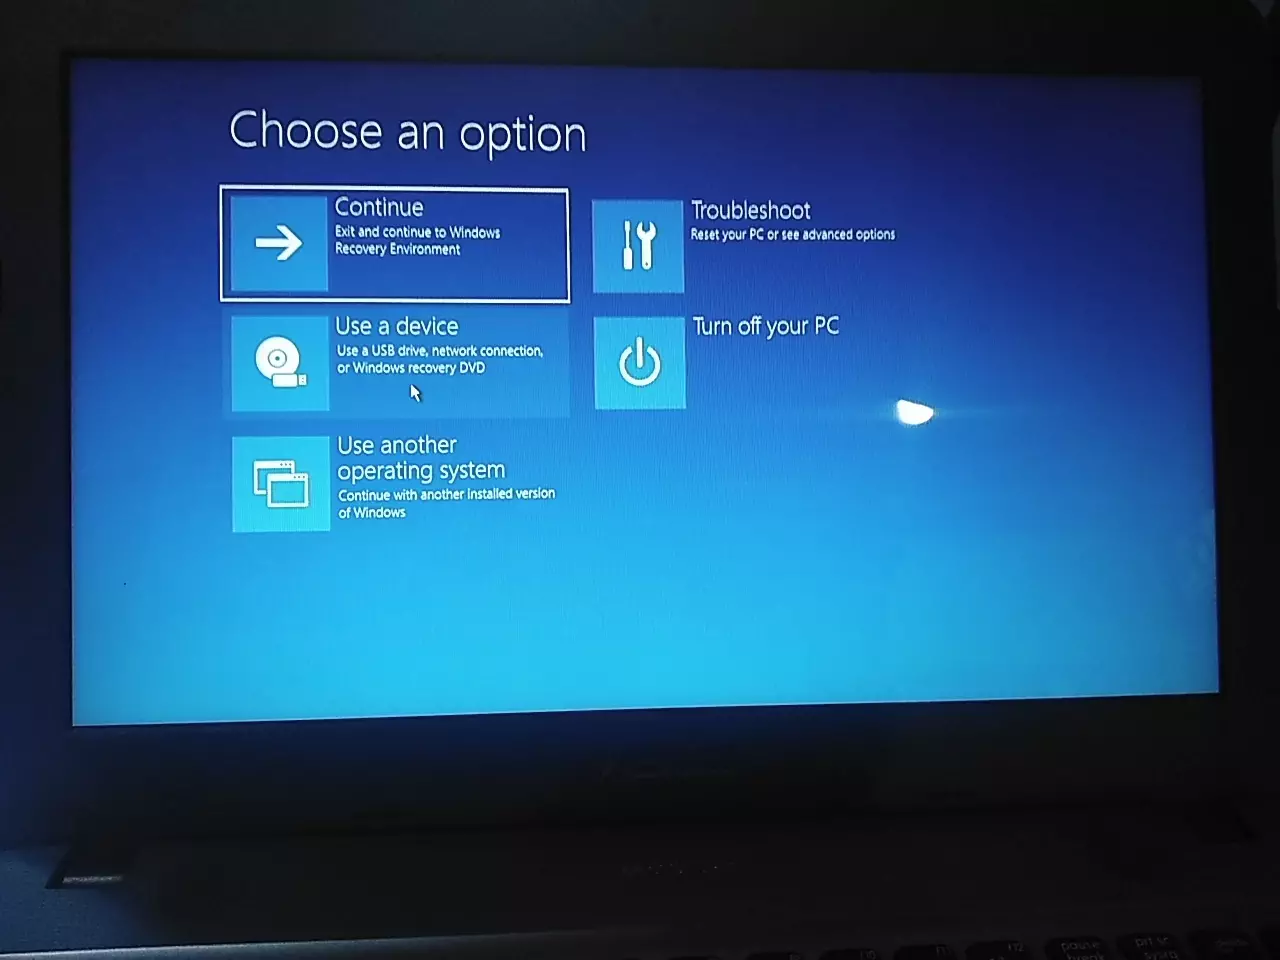 Cara Instal Windows 10